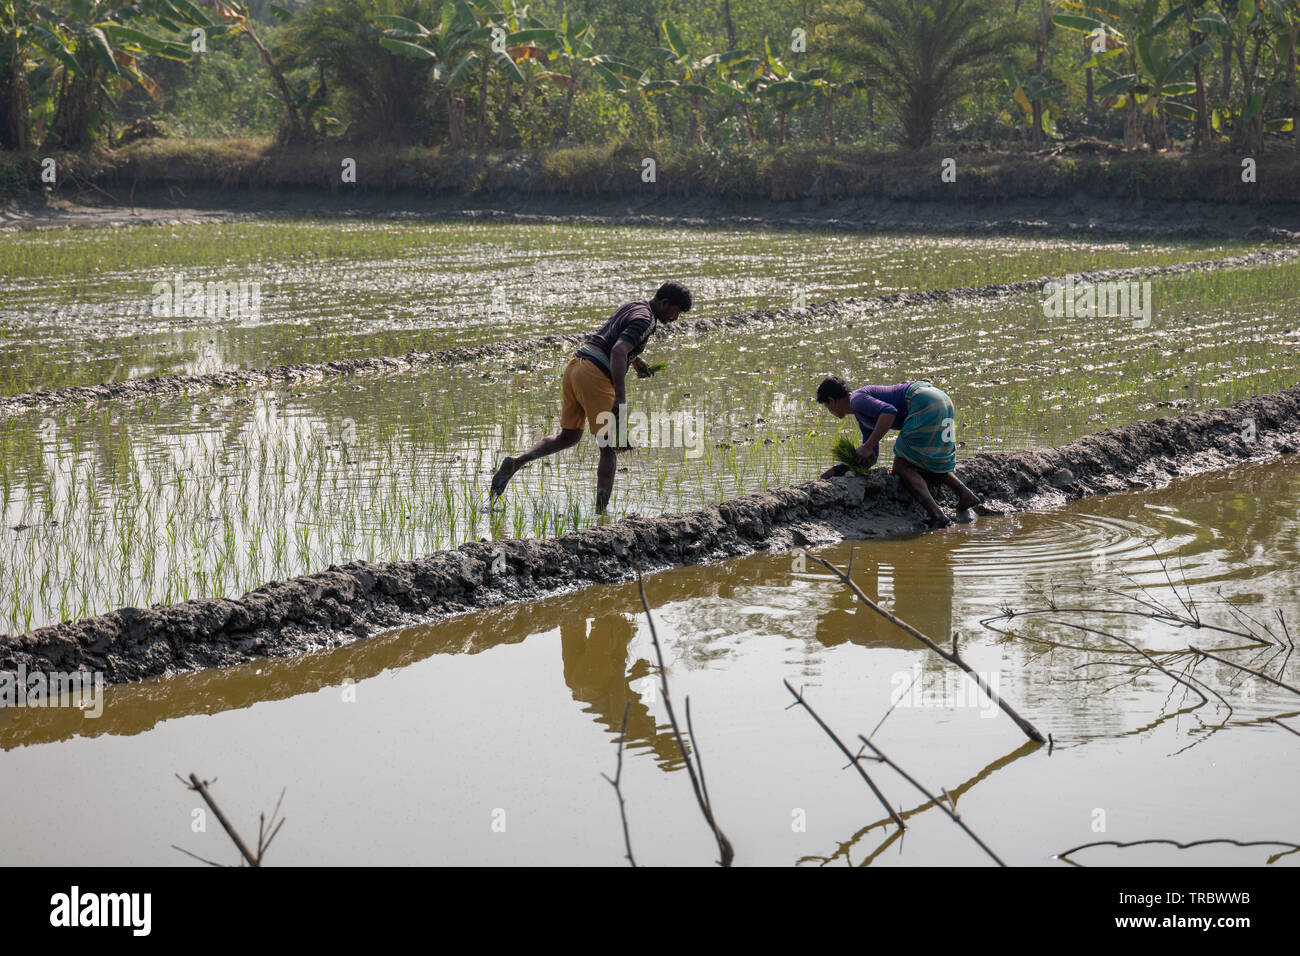 Planting rice in rural Bangladesh. Stock Photo